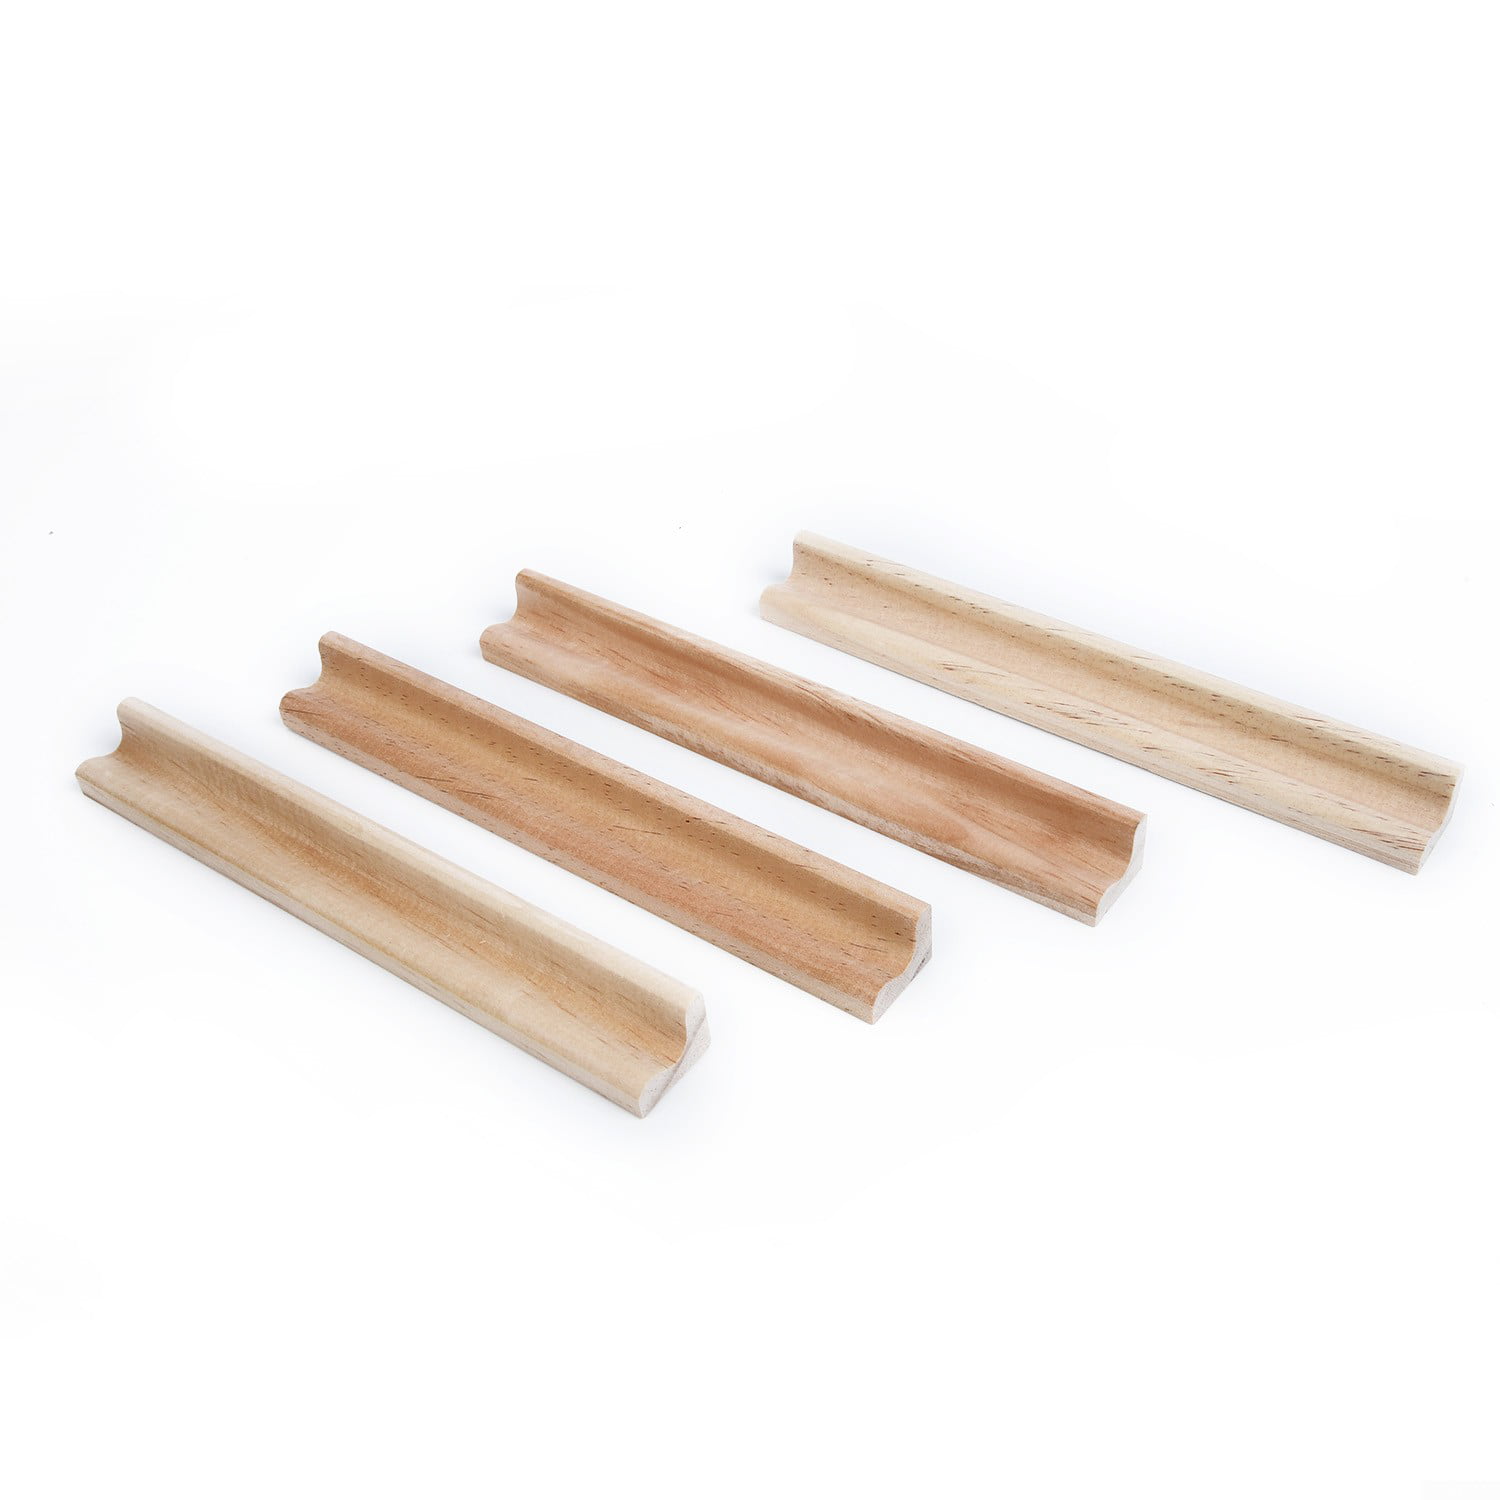 Craft 10 Pcs Scrabble Letter Stand Rack Tile Holder Wood Wooden Use For Wedding 